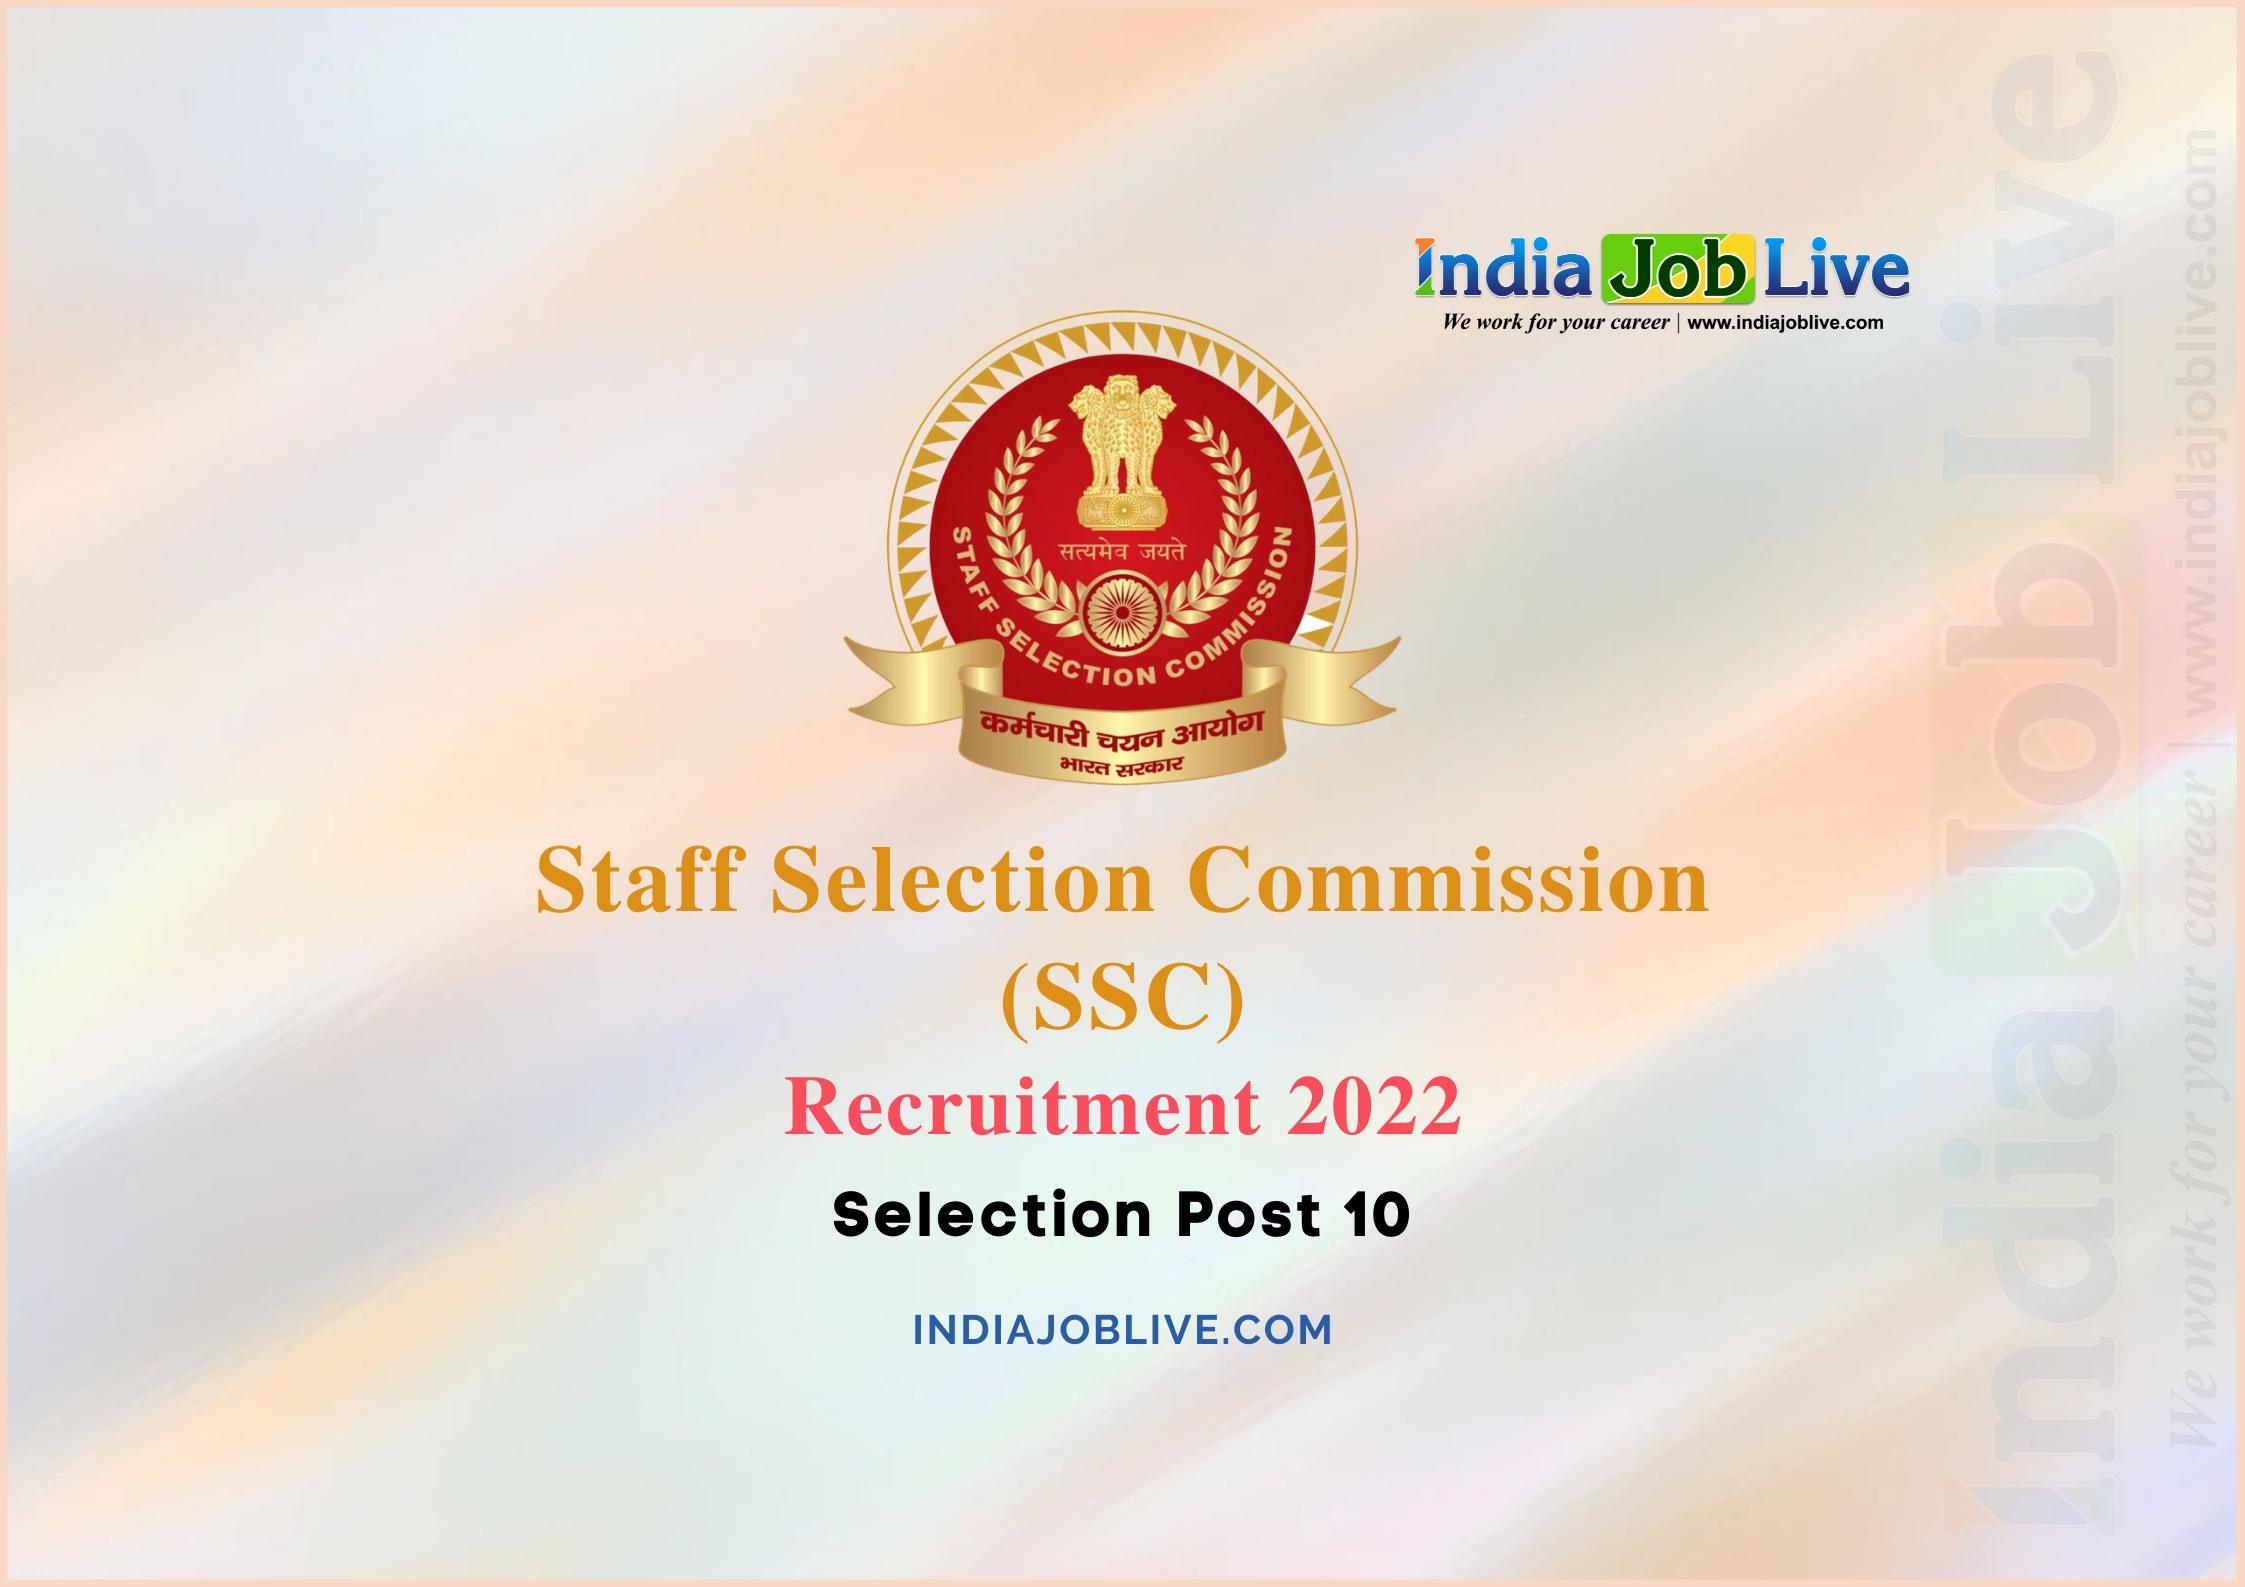 SSC Selection Post 10 Post Recruitment 2022 Job Vacancy 2065 Notification Details Apply